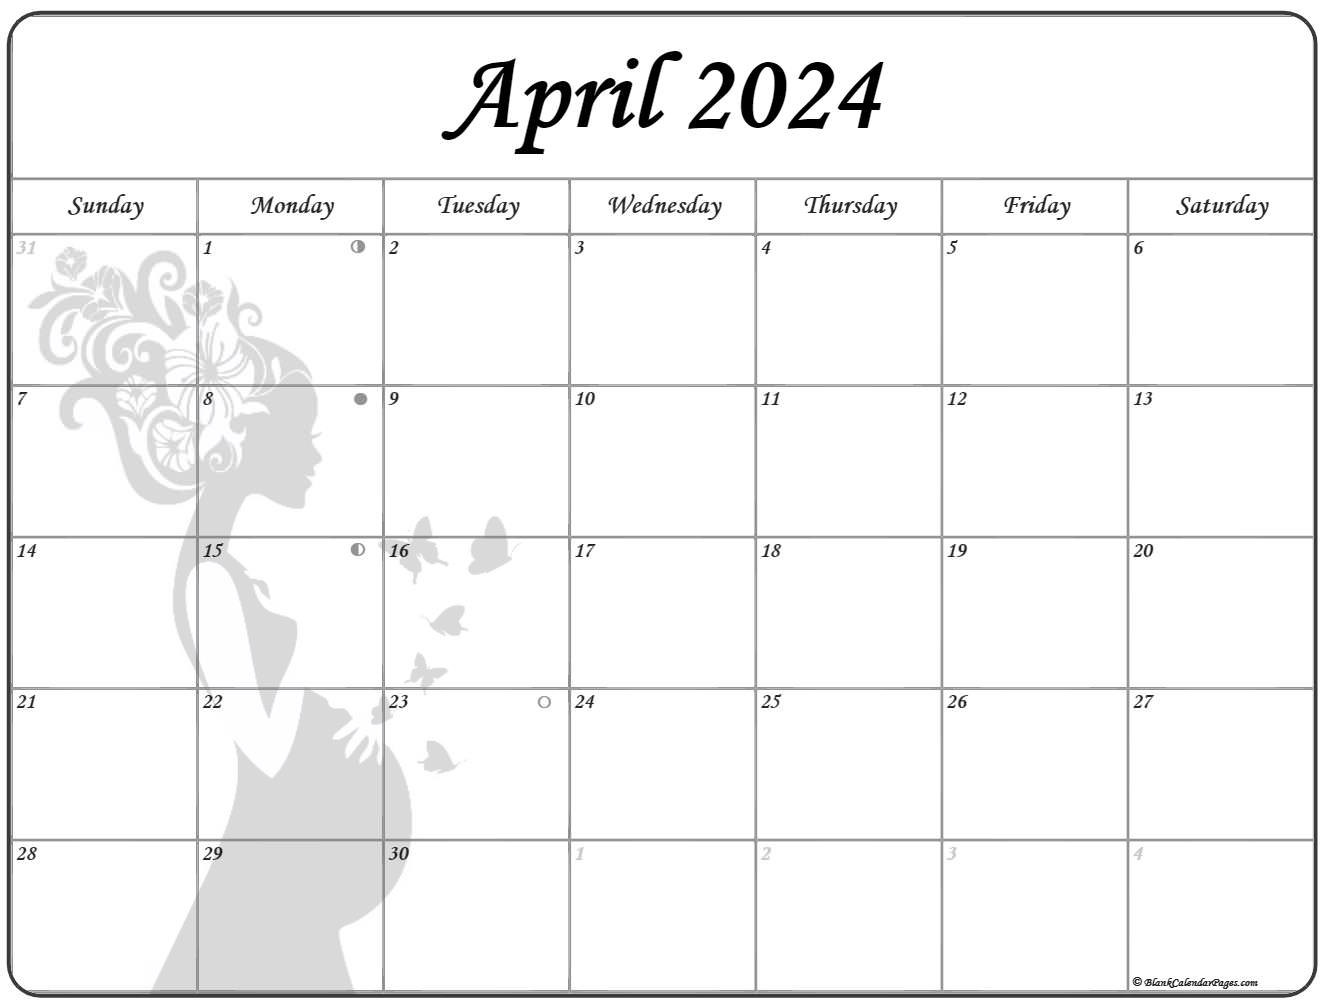 April 2020 Pregnancy Calendar | Fertility Calendar1767 x 1339